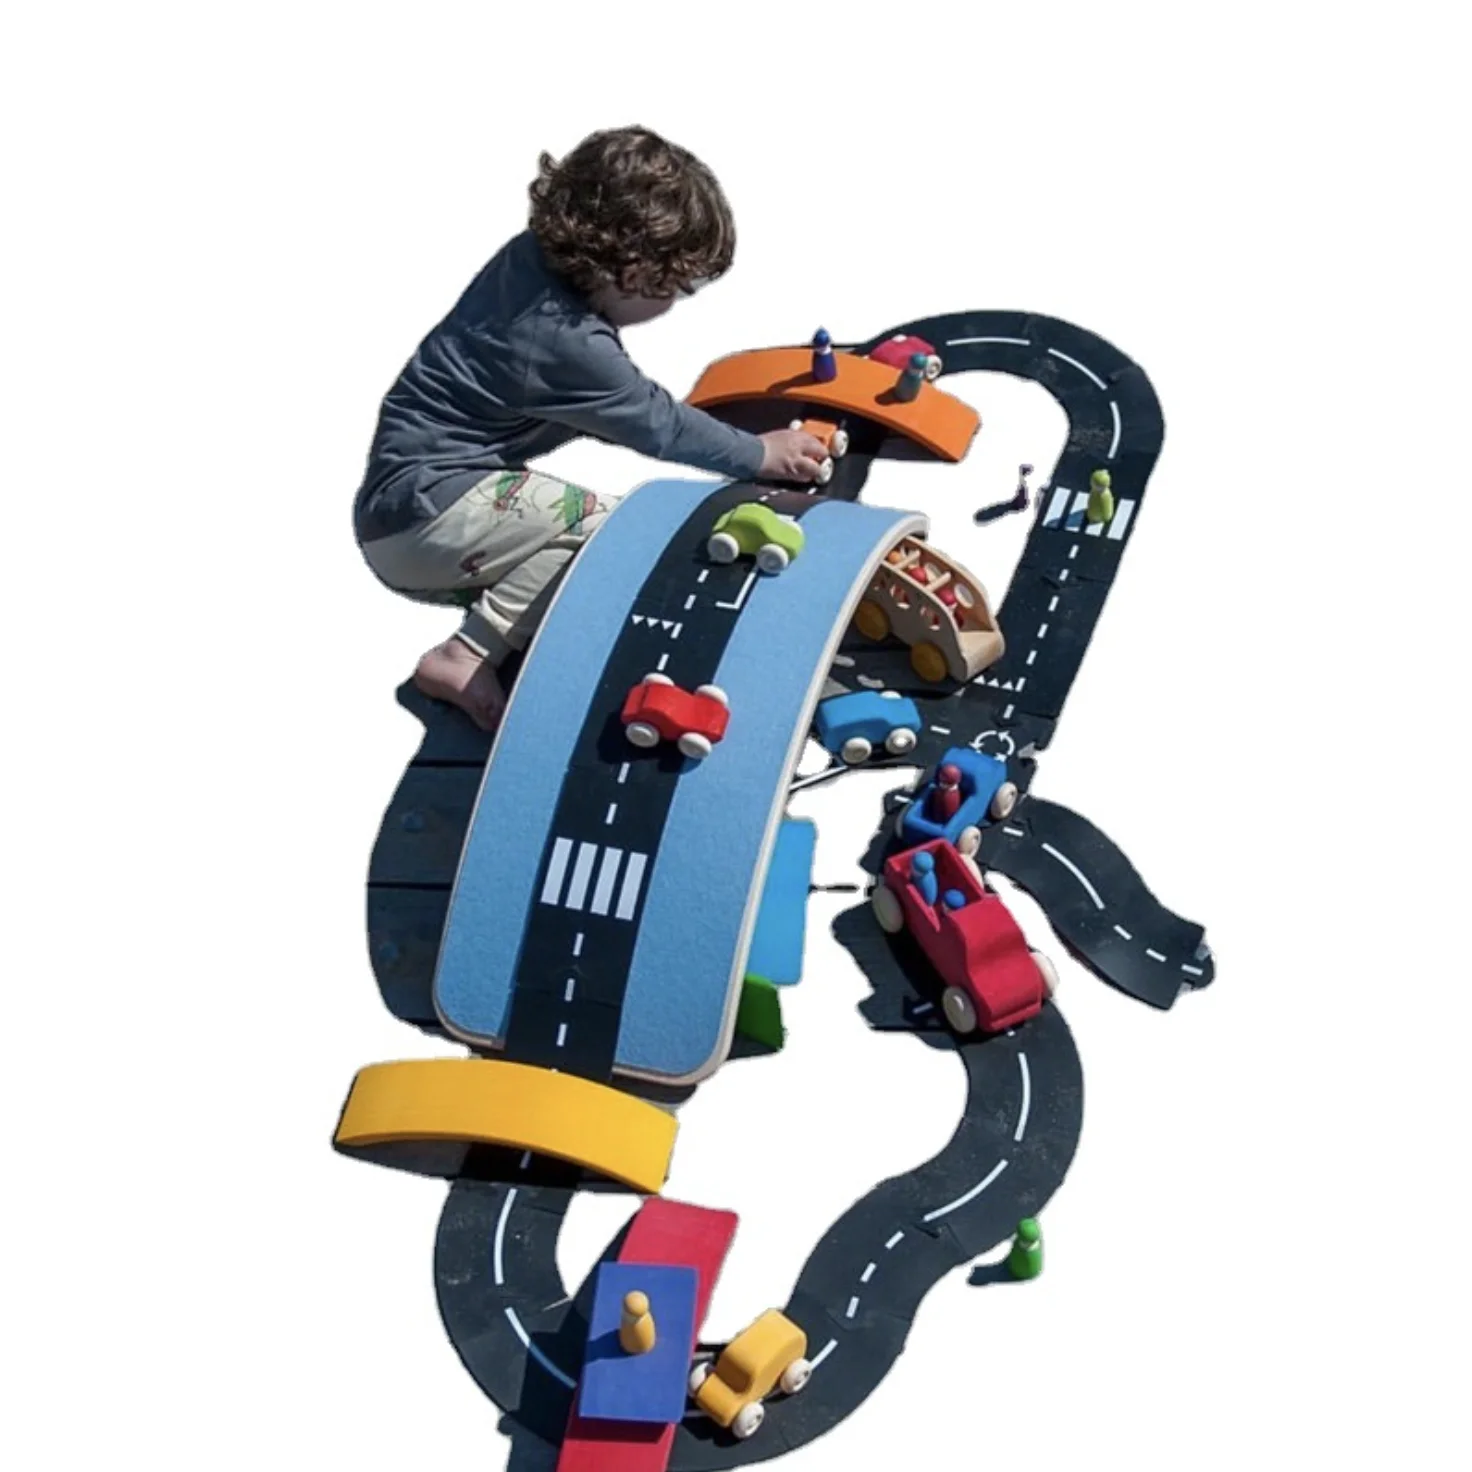 

Educational Play Toys for Children Games Carpet Racing Car Track Toy Set DIY Plastic Box Pvc Unisex Picture Slot Car Race 1:16